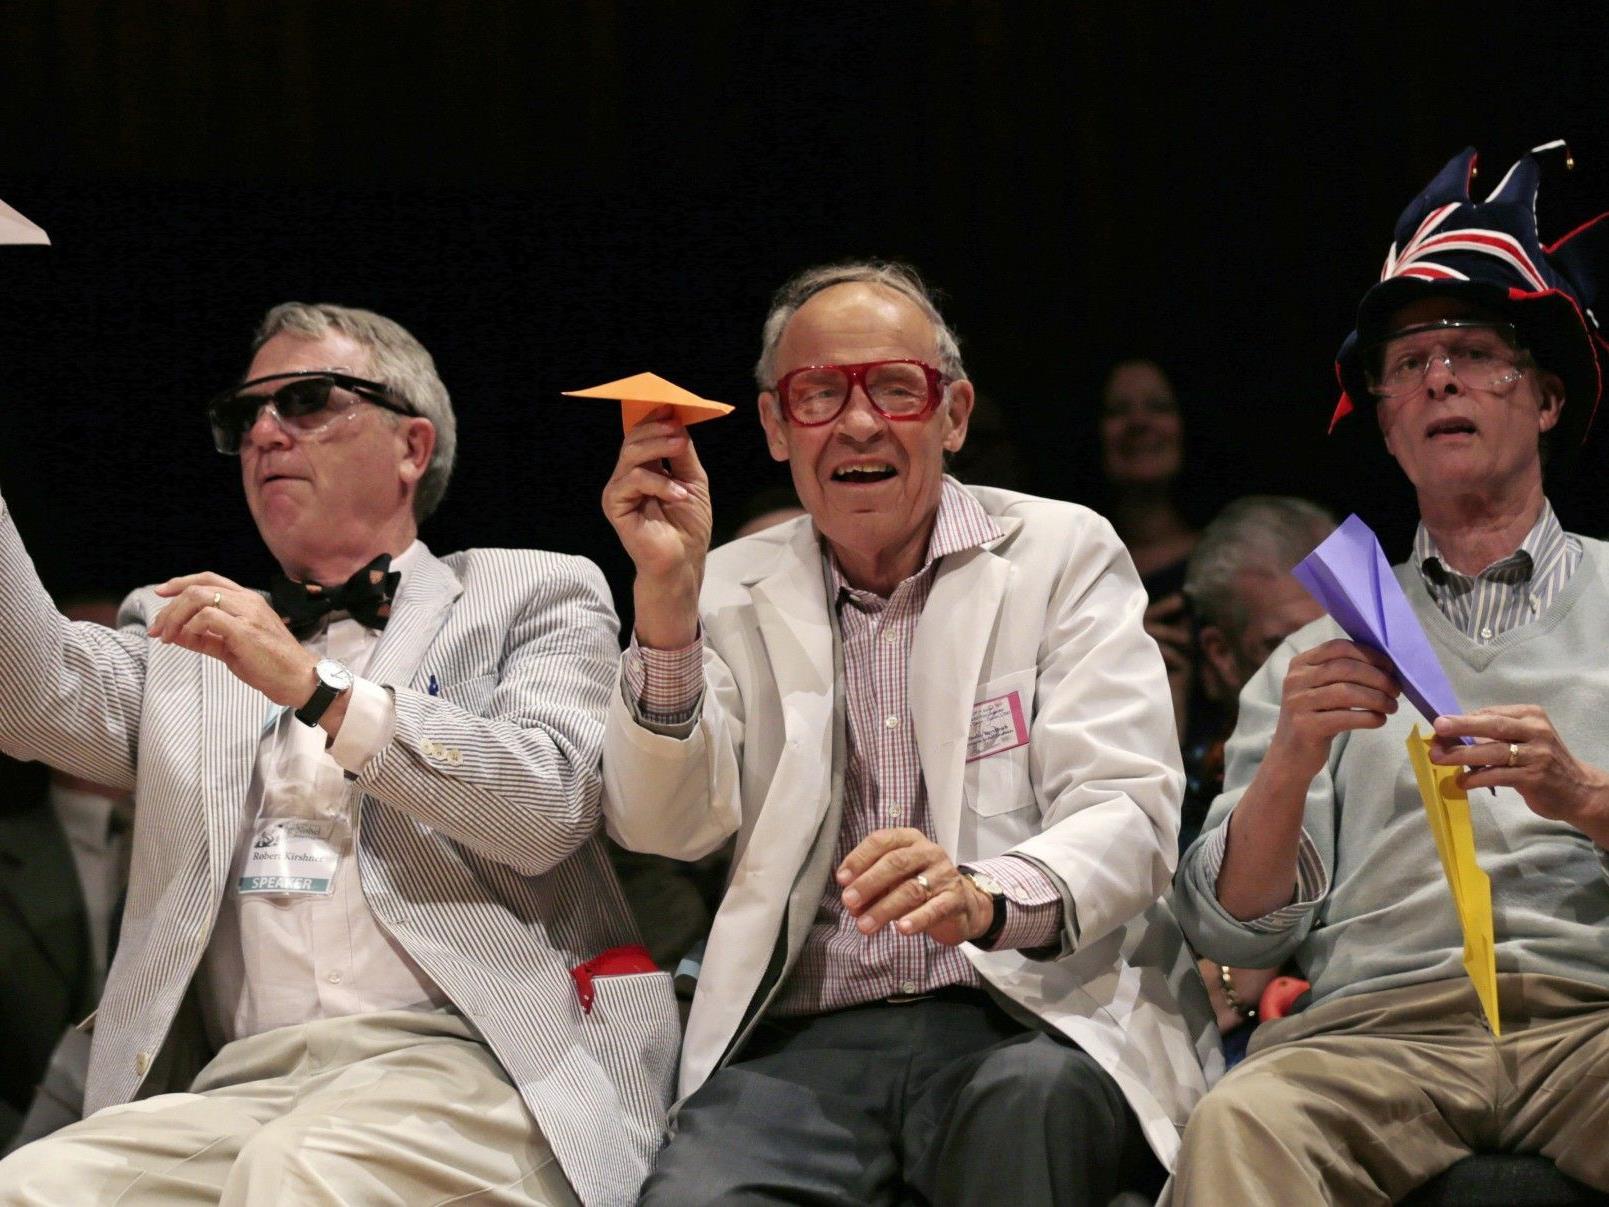 Ig-Nobelpreis soll "erst zum Lachen, dann zum Denken anregen".